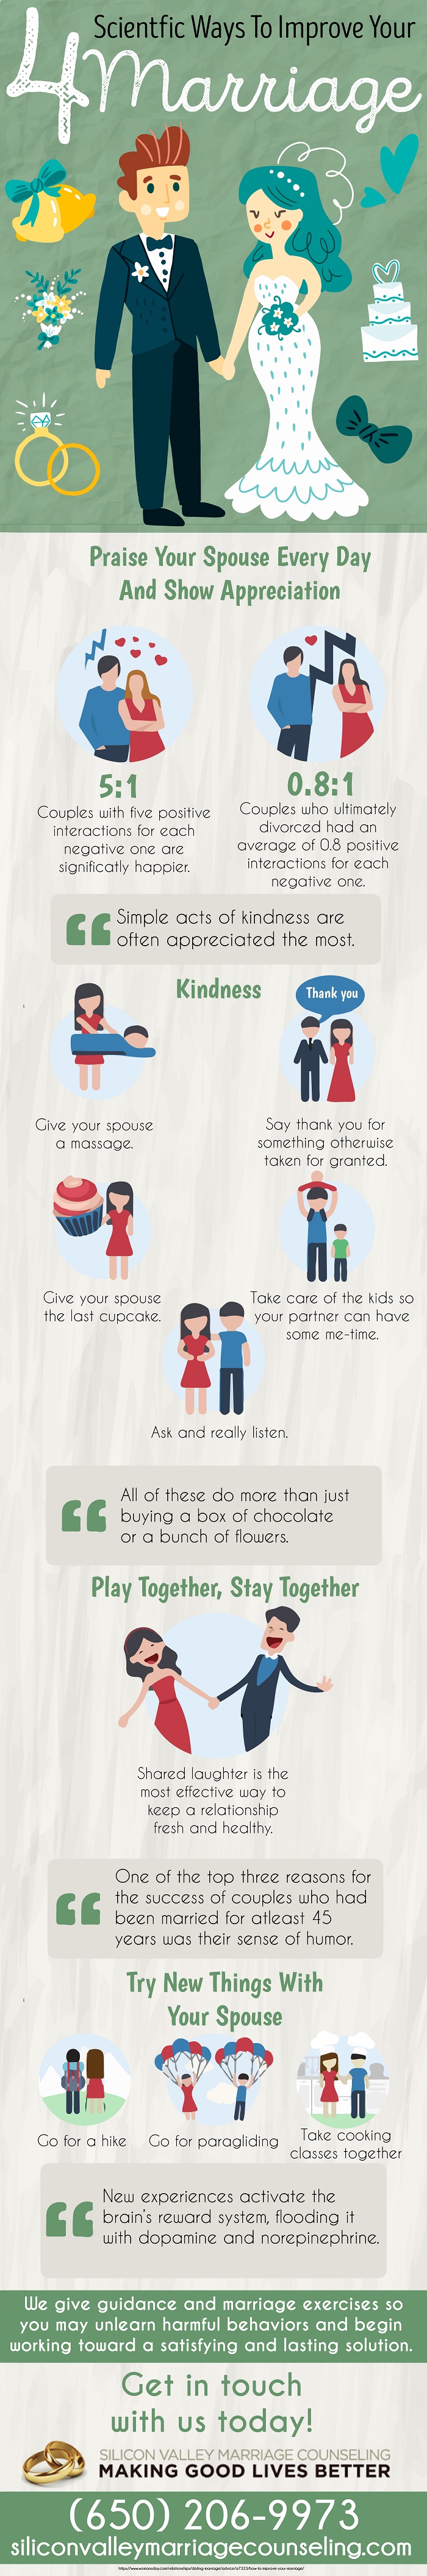 4 Scientific Ways To Improve Your Marriage